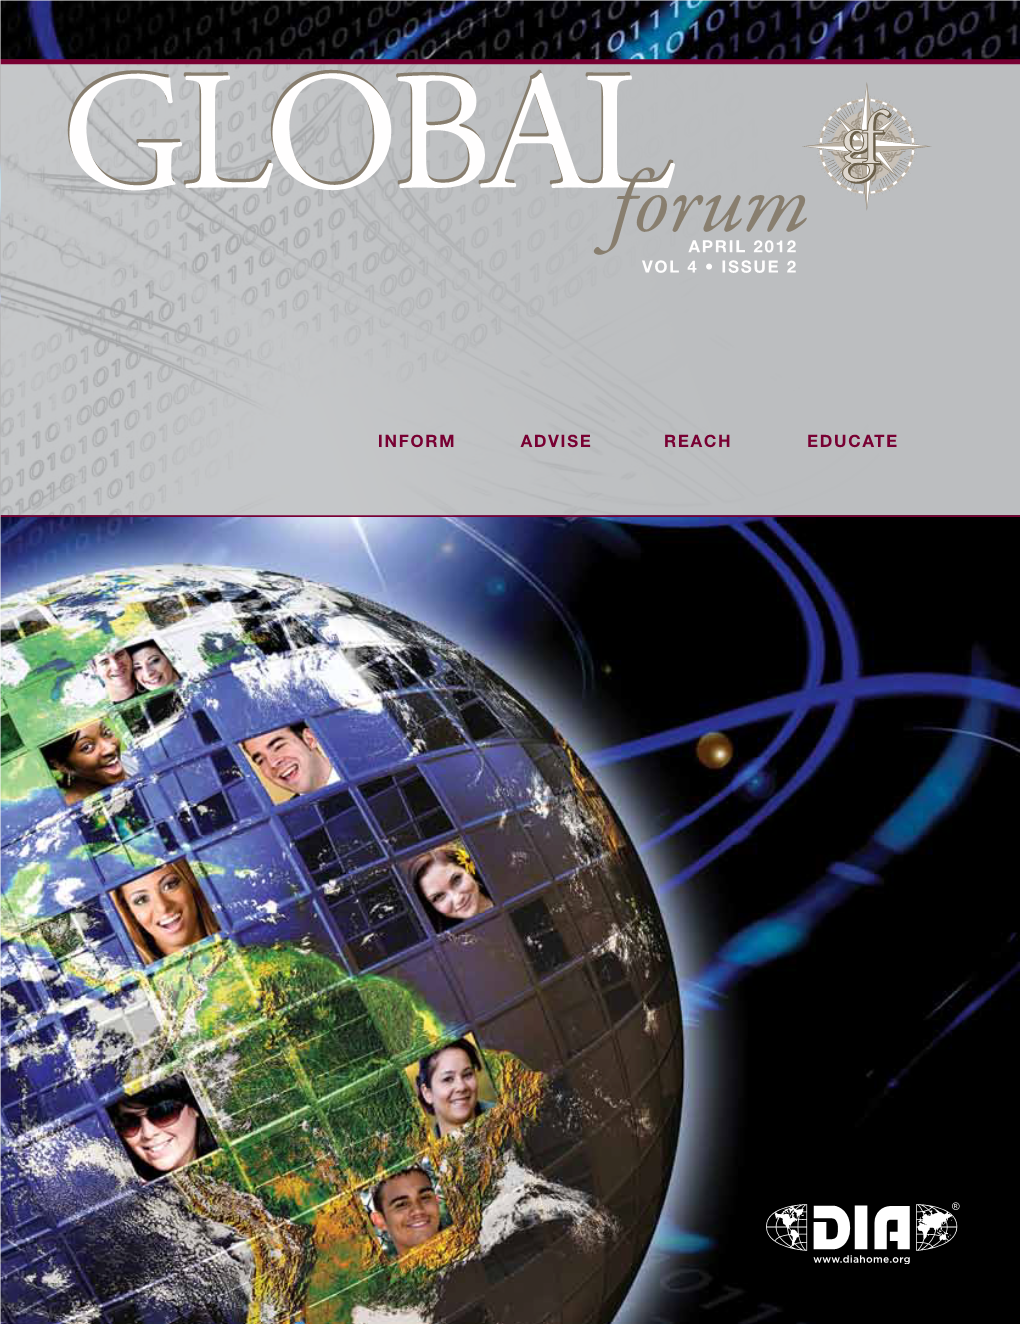 GLOBAL Ggff Forumapril 2012 VOL 4 • ISSUE 2